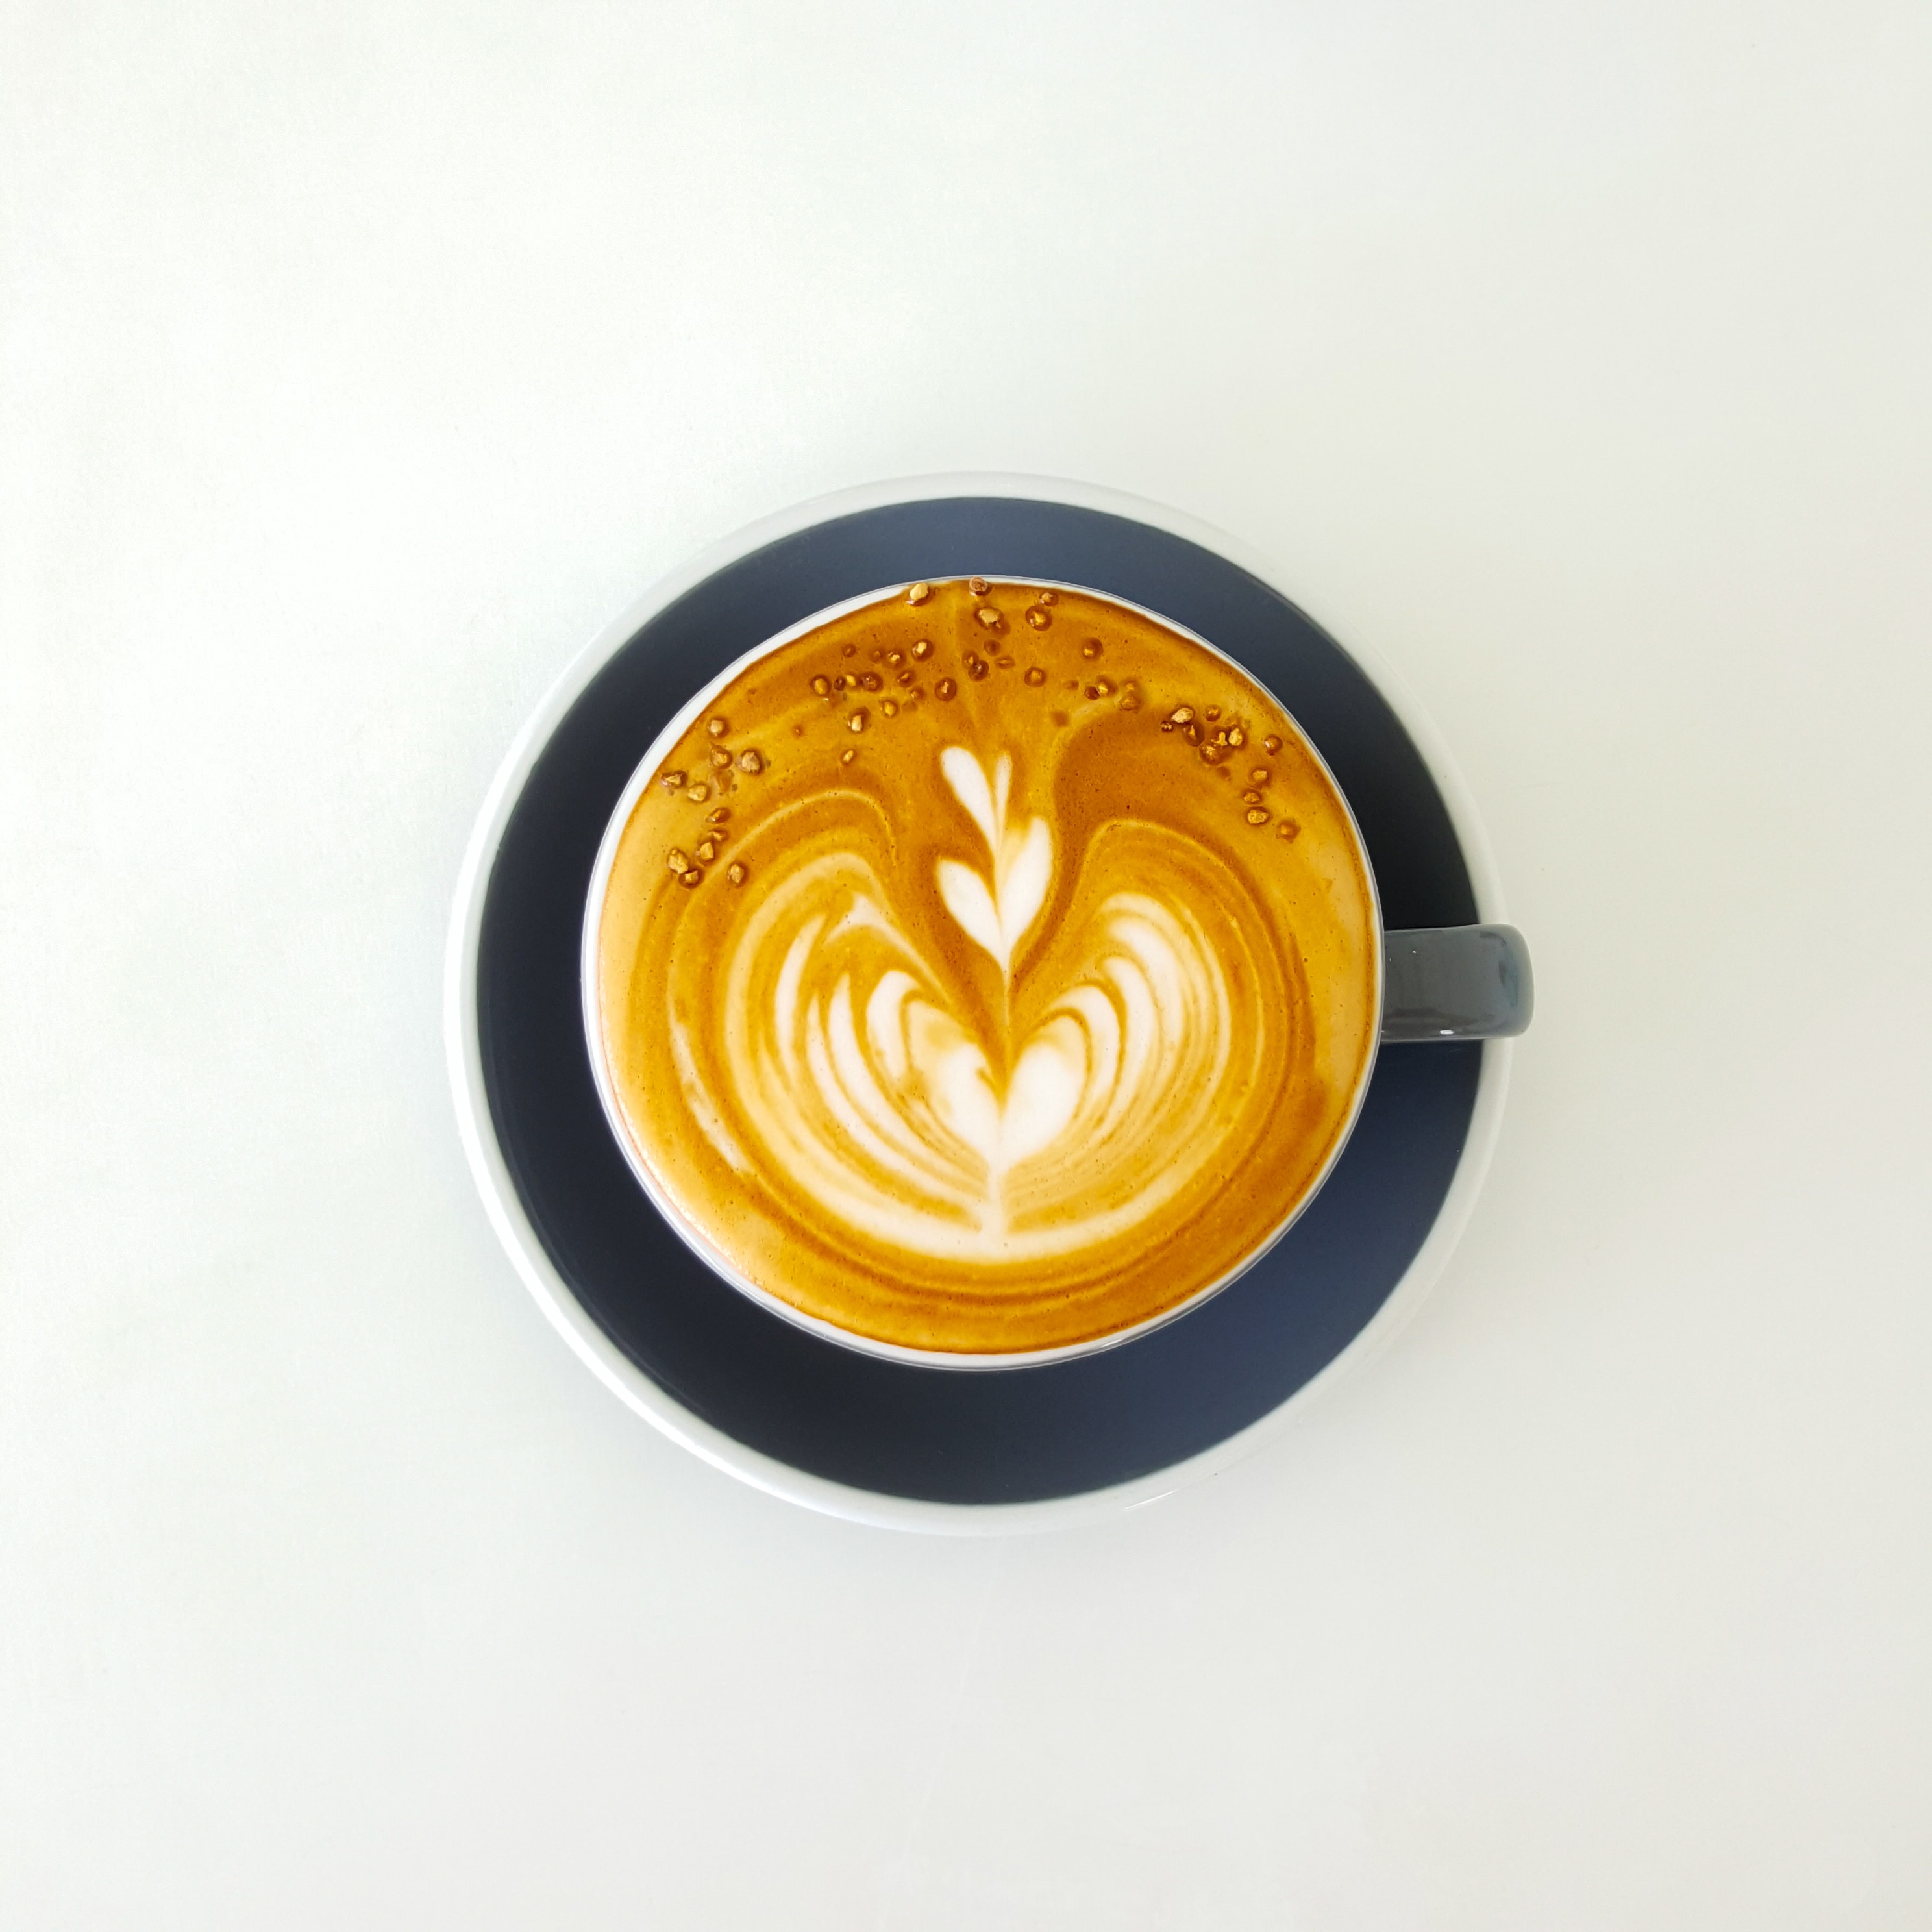 https://www.justmilk.com/wp-content/uploads/2019/05/milk-for-frothy-coffee-machines.jpg